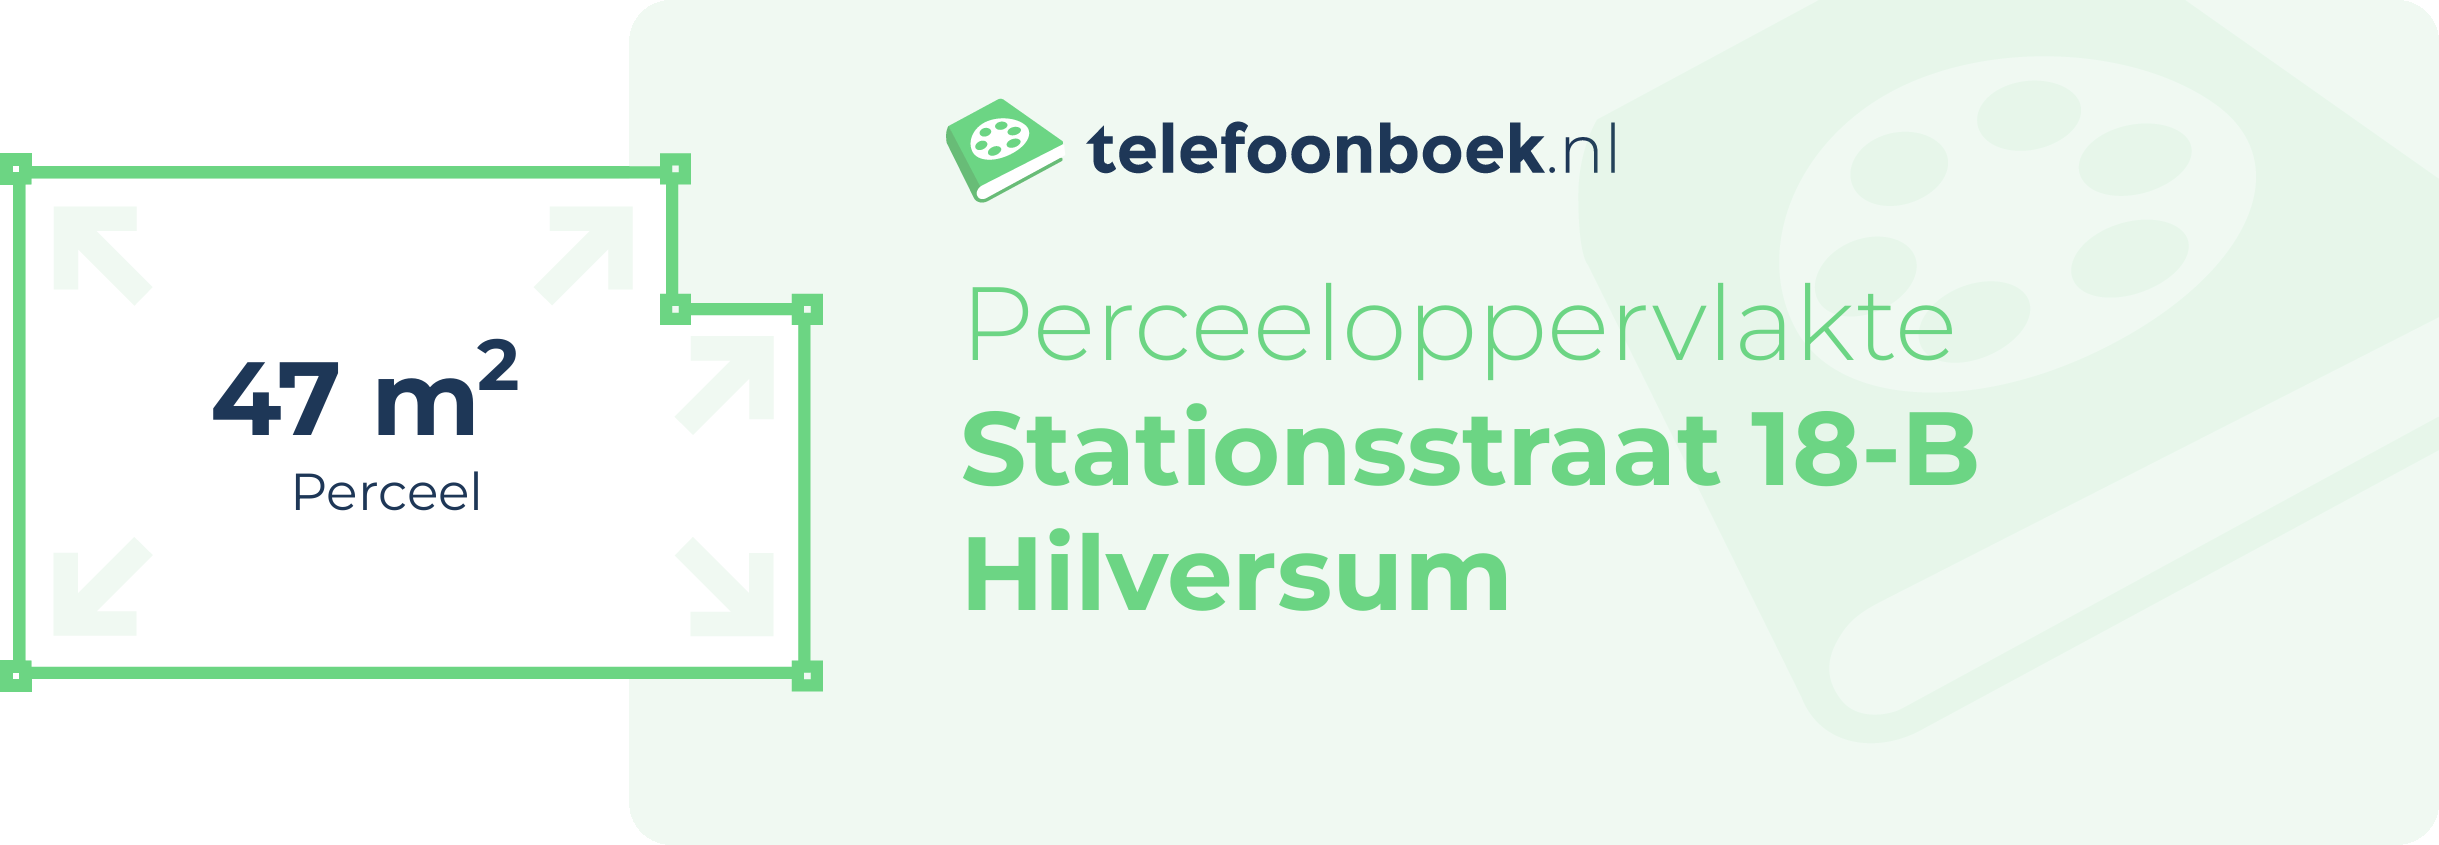 Perceeloppervlakte Stationsstraat 18-B Hilversum